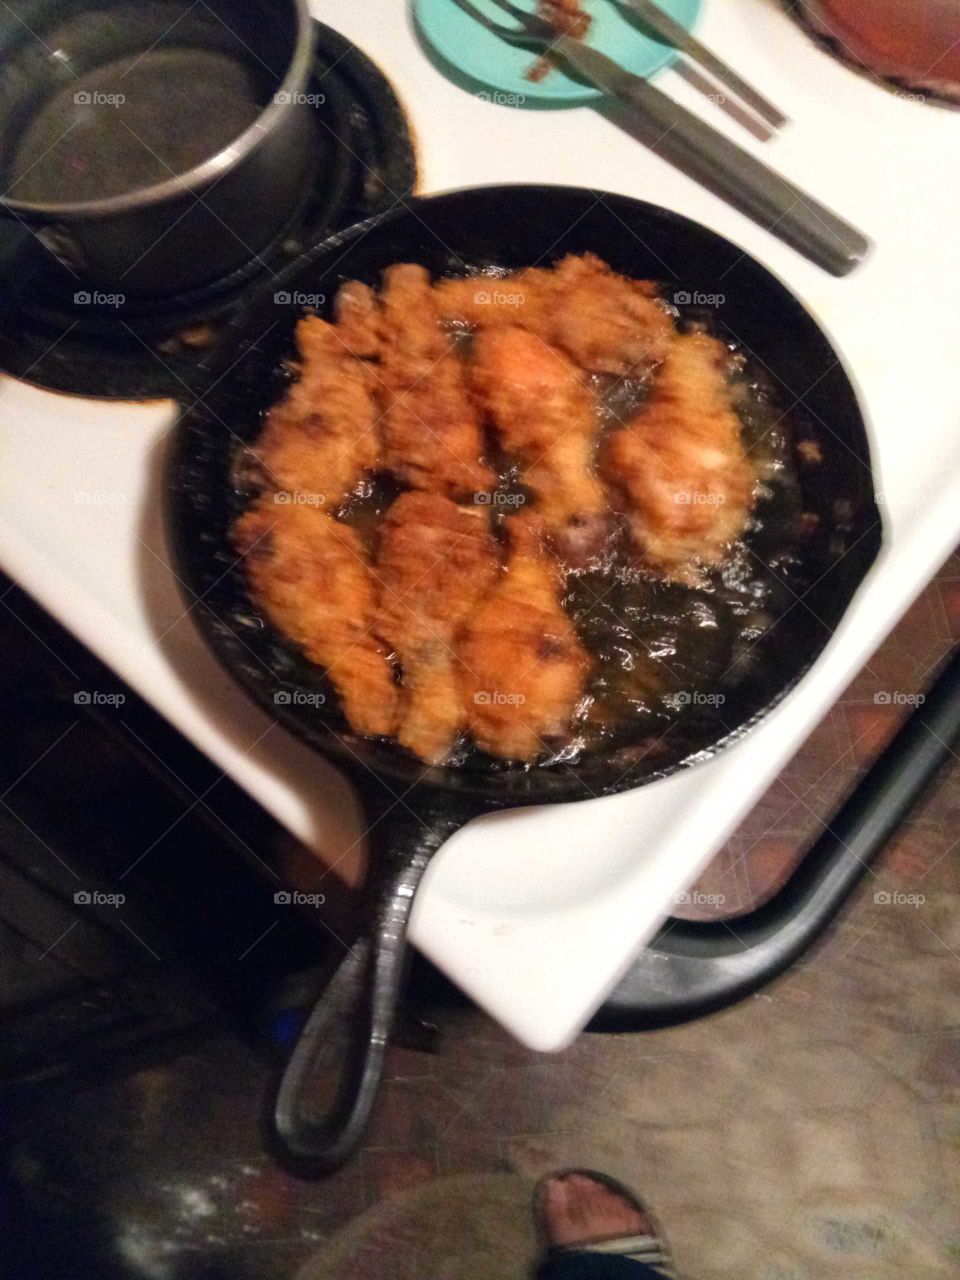 My fried chicken